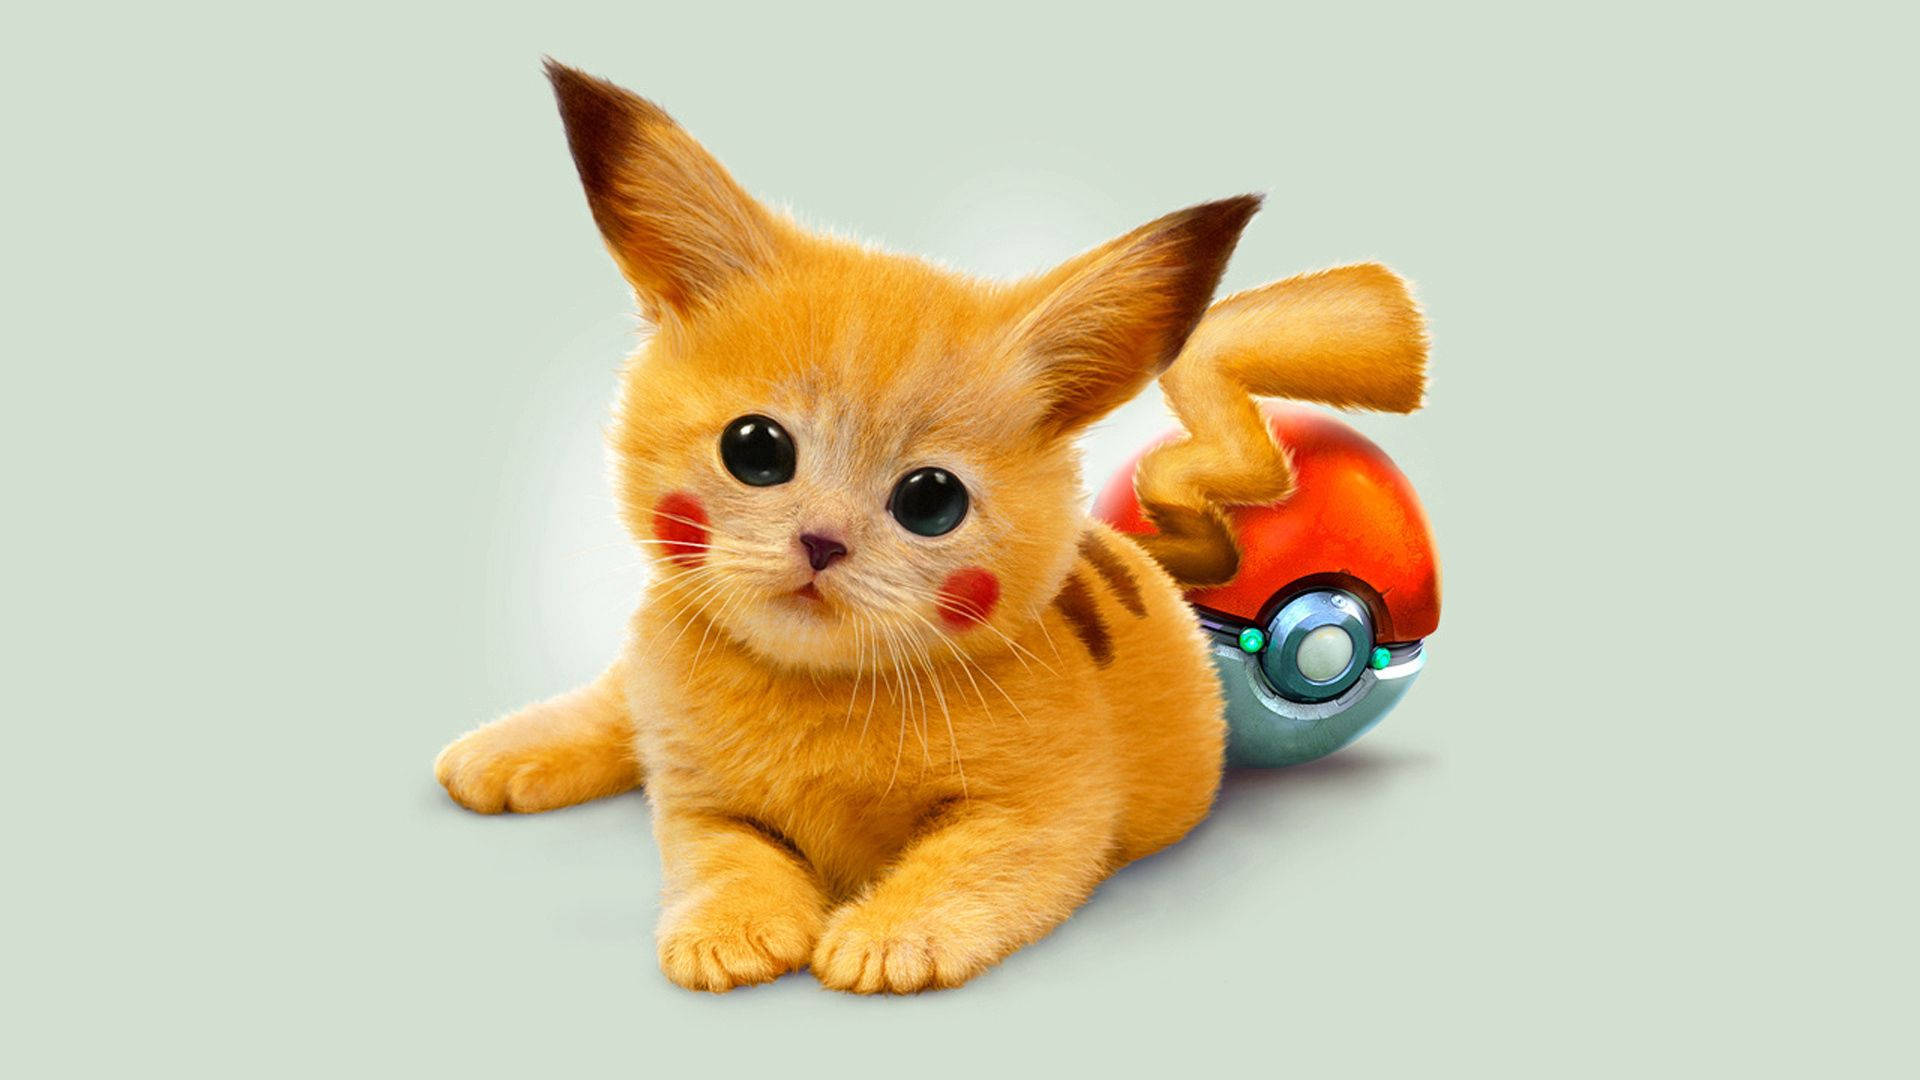 Cute and Cuddly Pikachu Cat Wallpaper